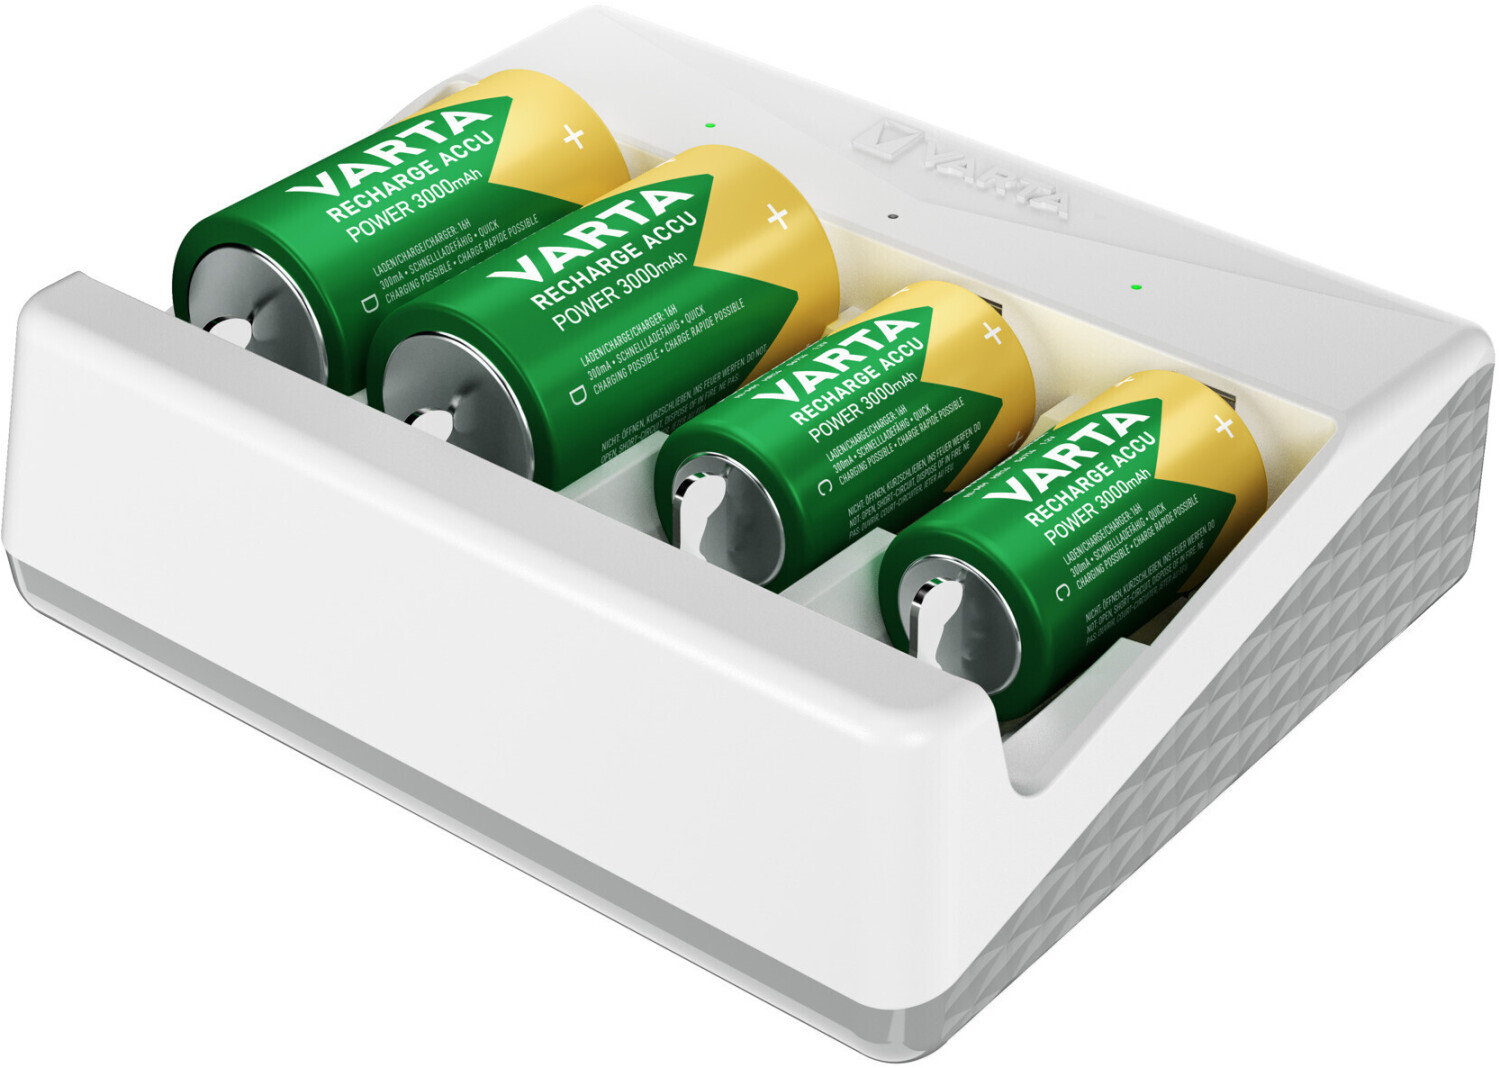 VARTA Universal charger - chargeur pour piles rechargeables AA/AAA/C/D ou 1 pile  9V Pas Cher